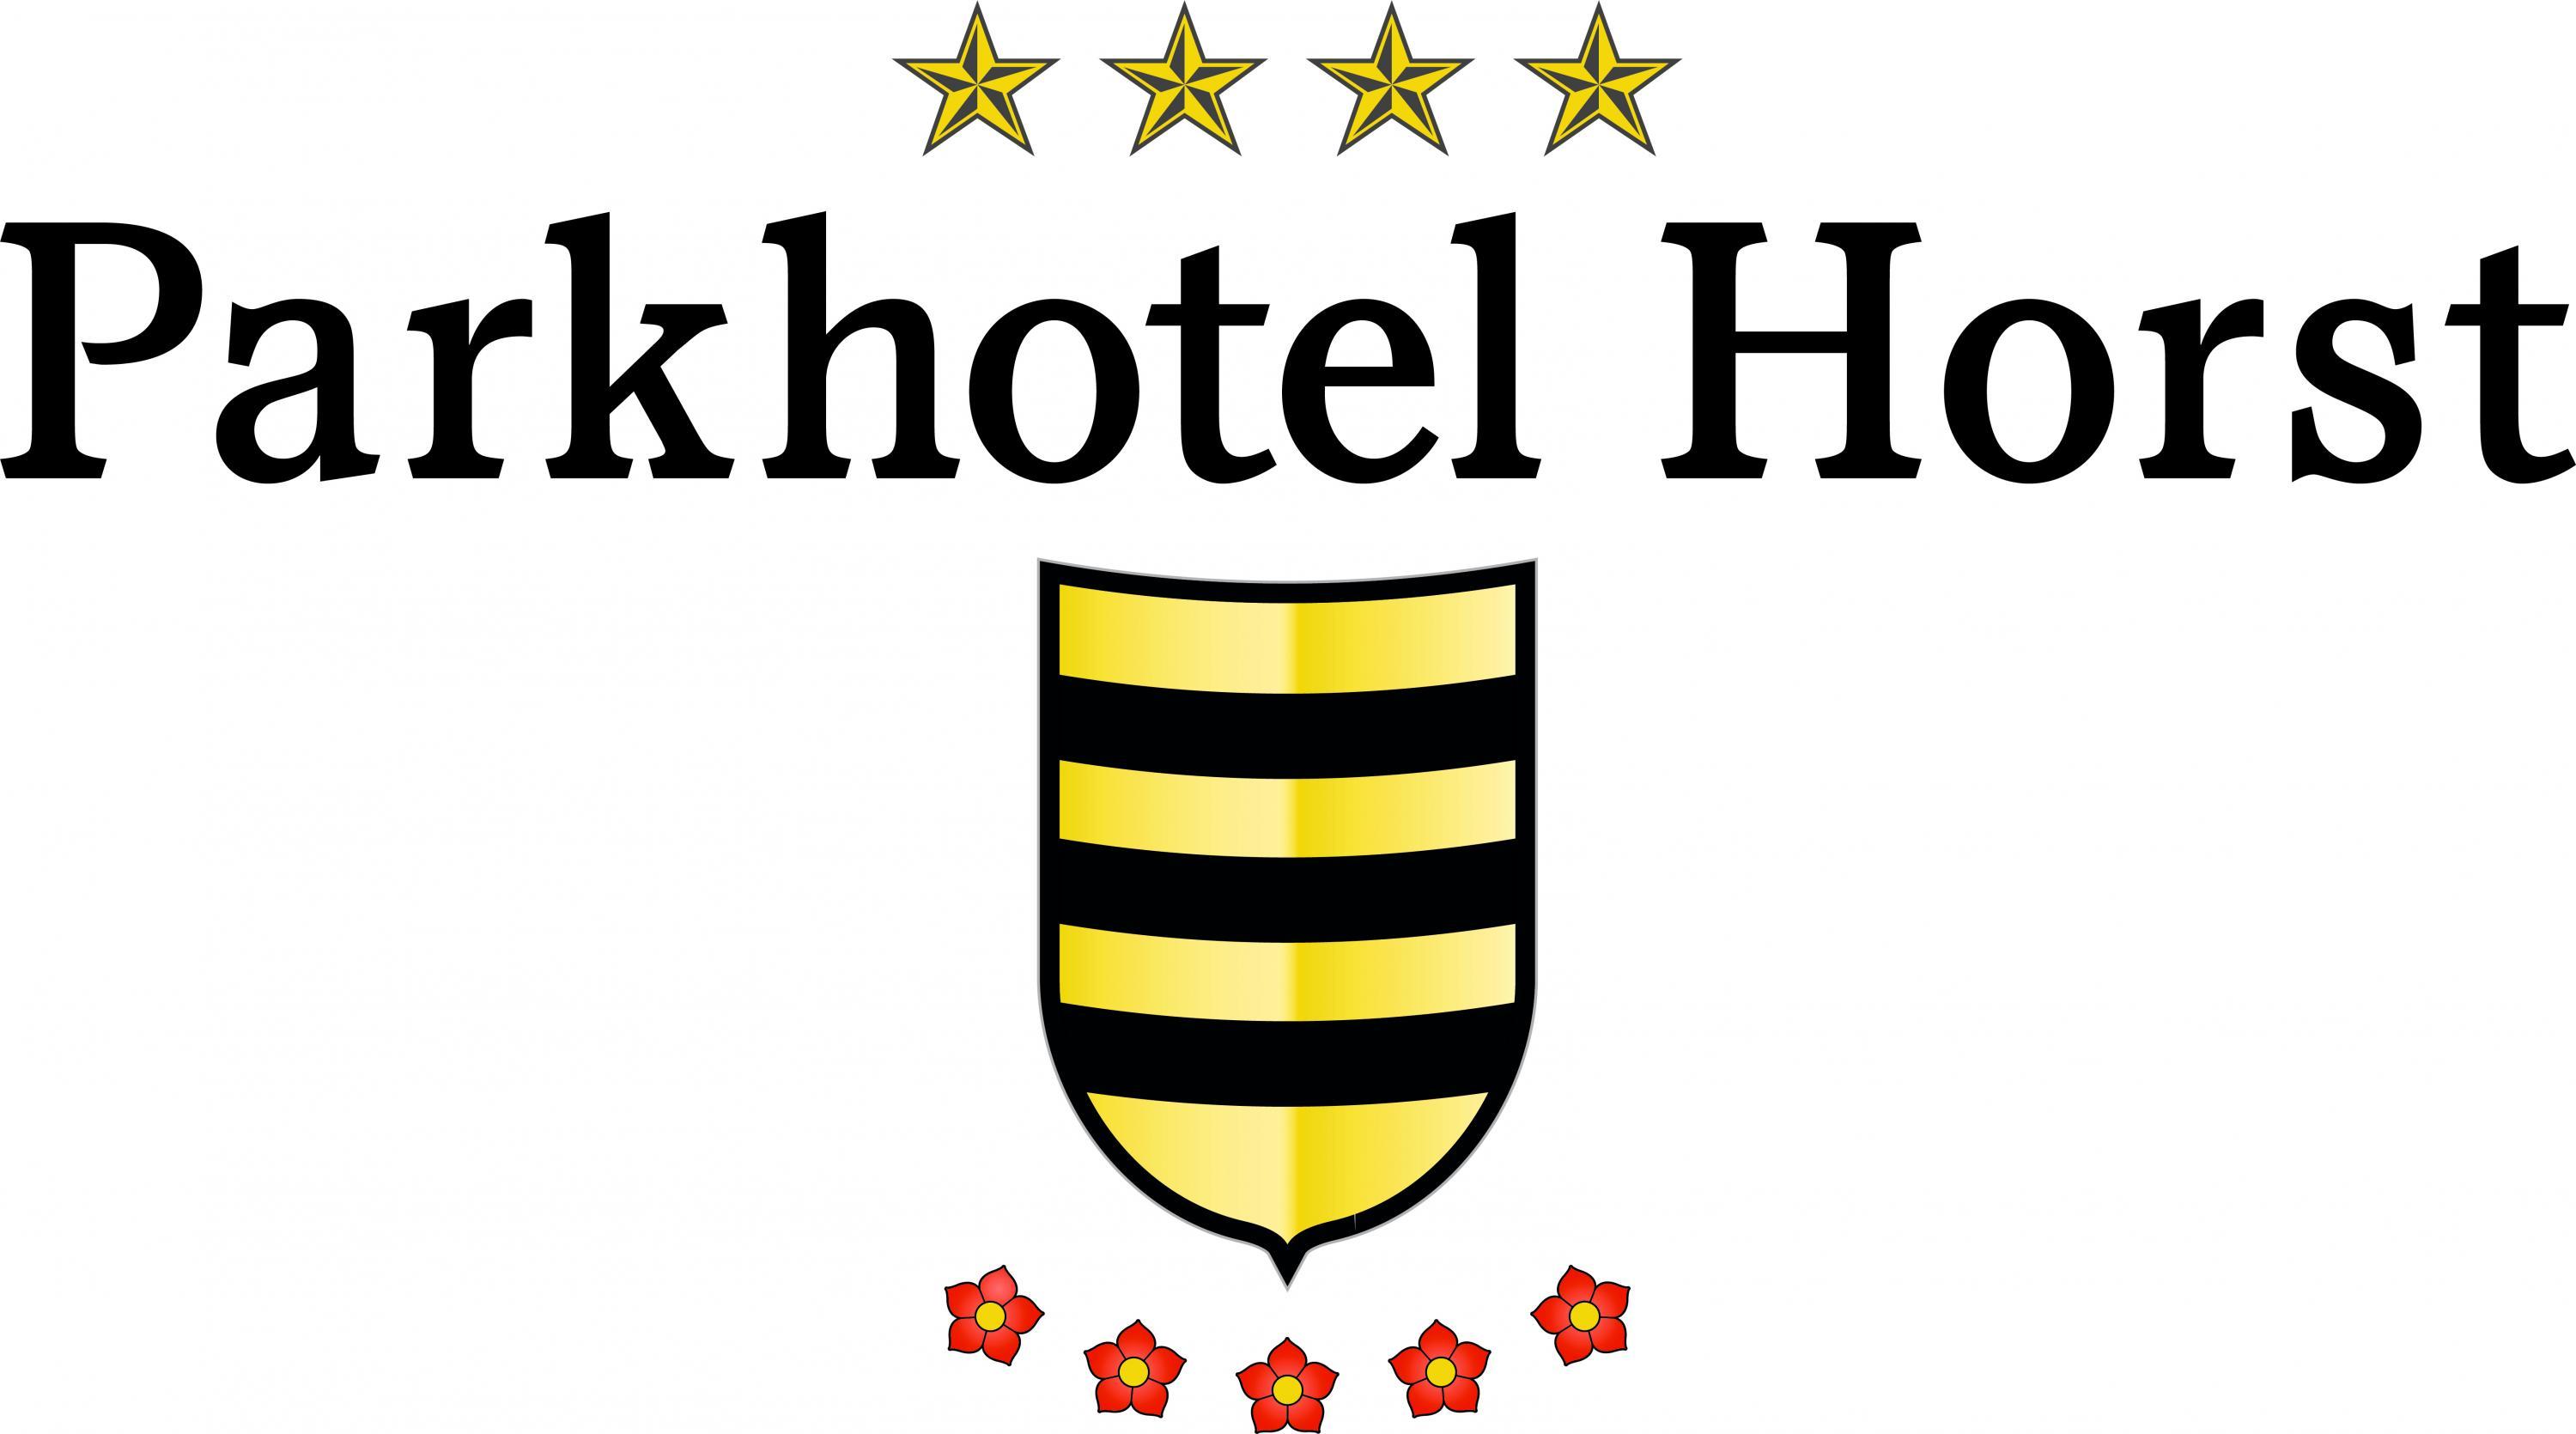 Parkhotel Horst logo.jpg